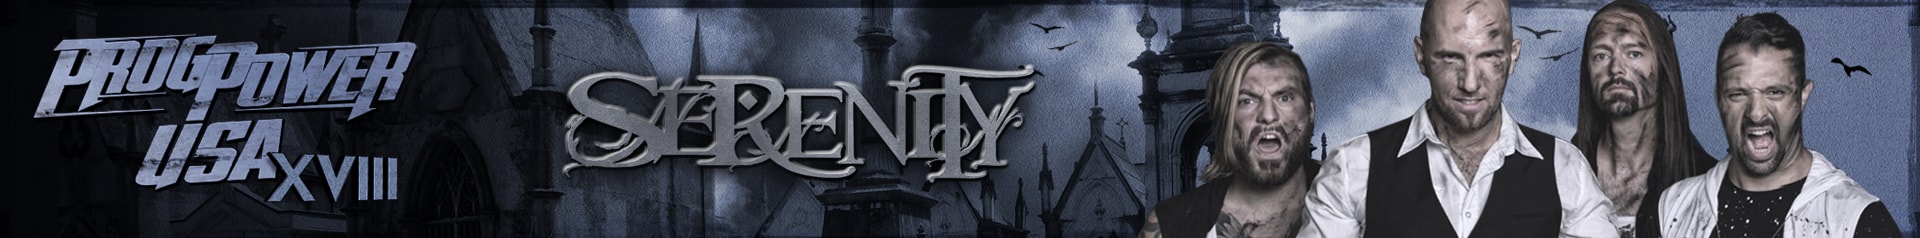 Serenity Web Banner